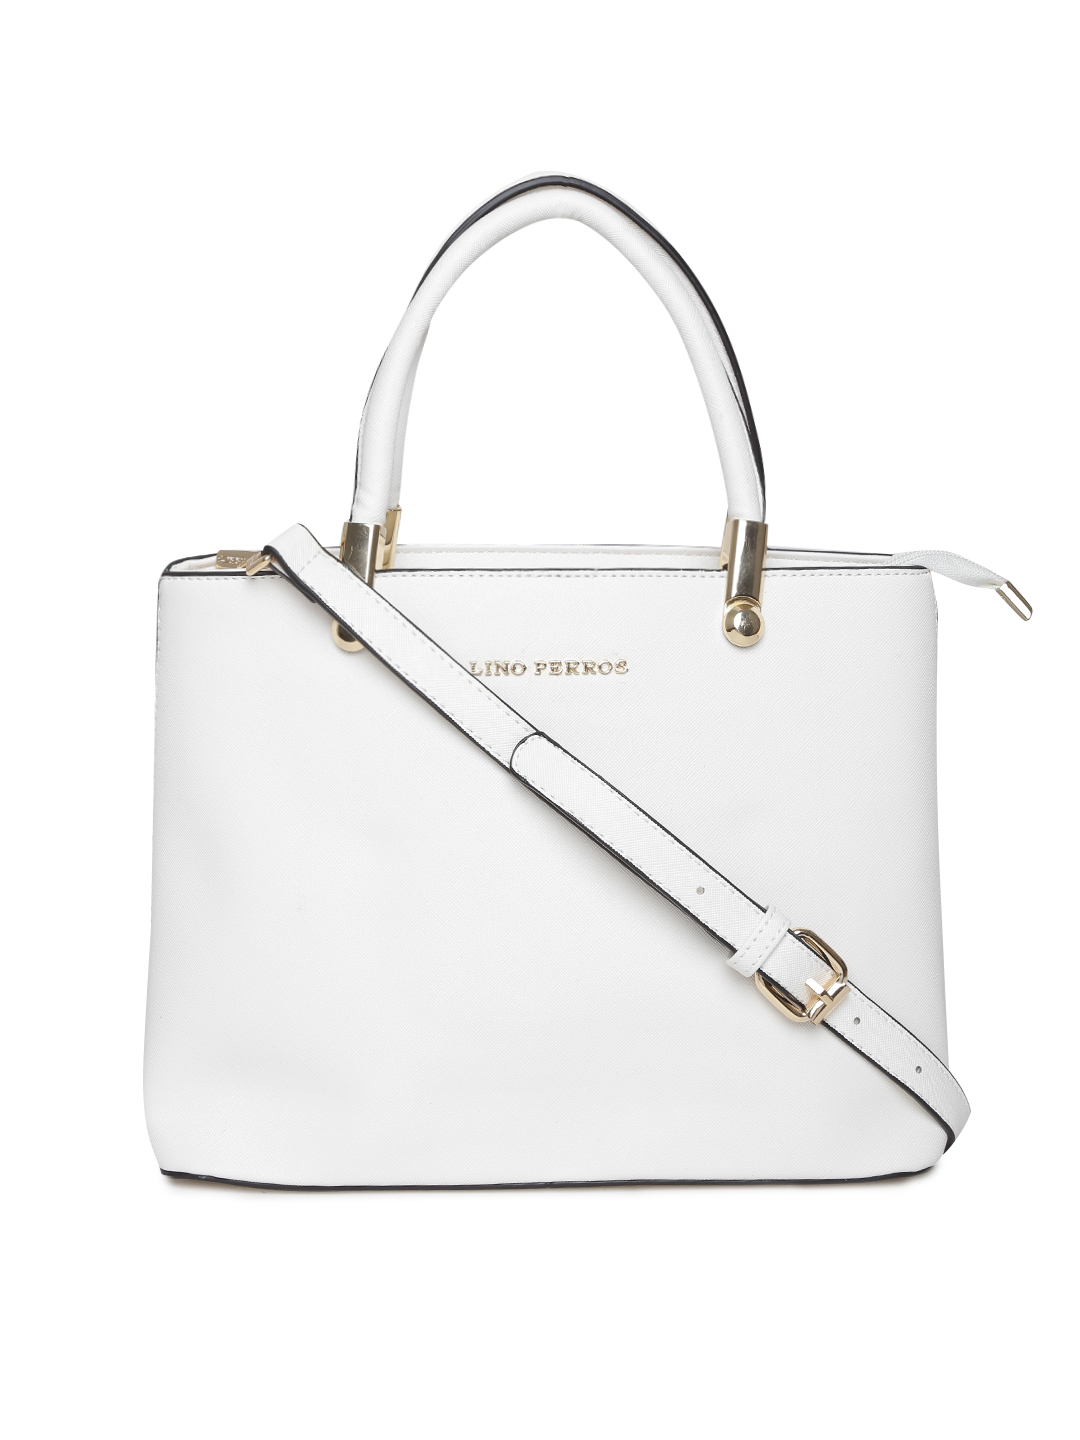 Lisa Haydon for Lino Perros White Handbag with Sling Strap